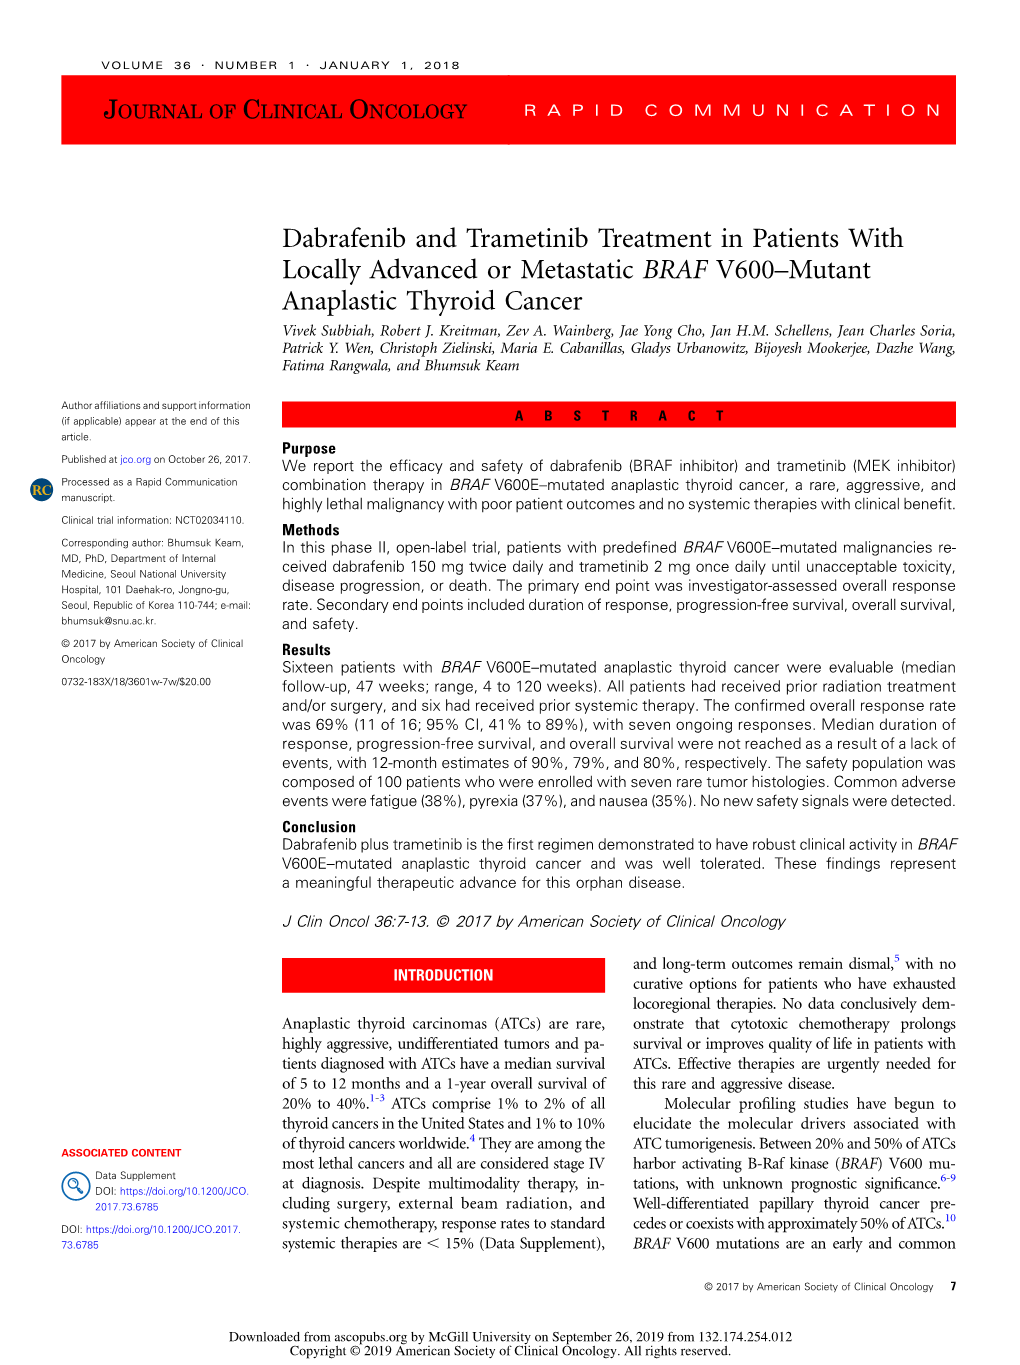 Dabrafenib and Trametinib Treatment in Patients with Locally Advanced Or Metastatic BRAF V600–Mutant Anaplastic Thyroid Cancer Vivek Subbiah, Robert J